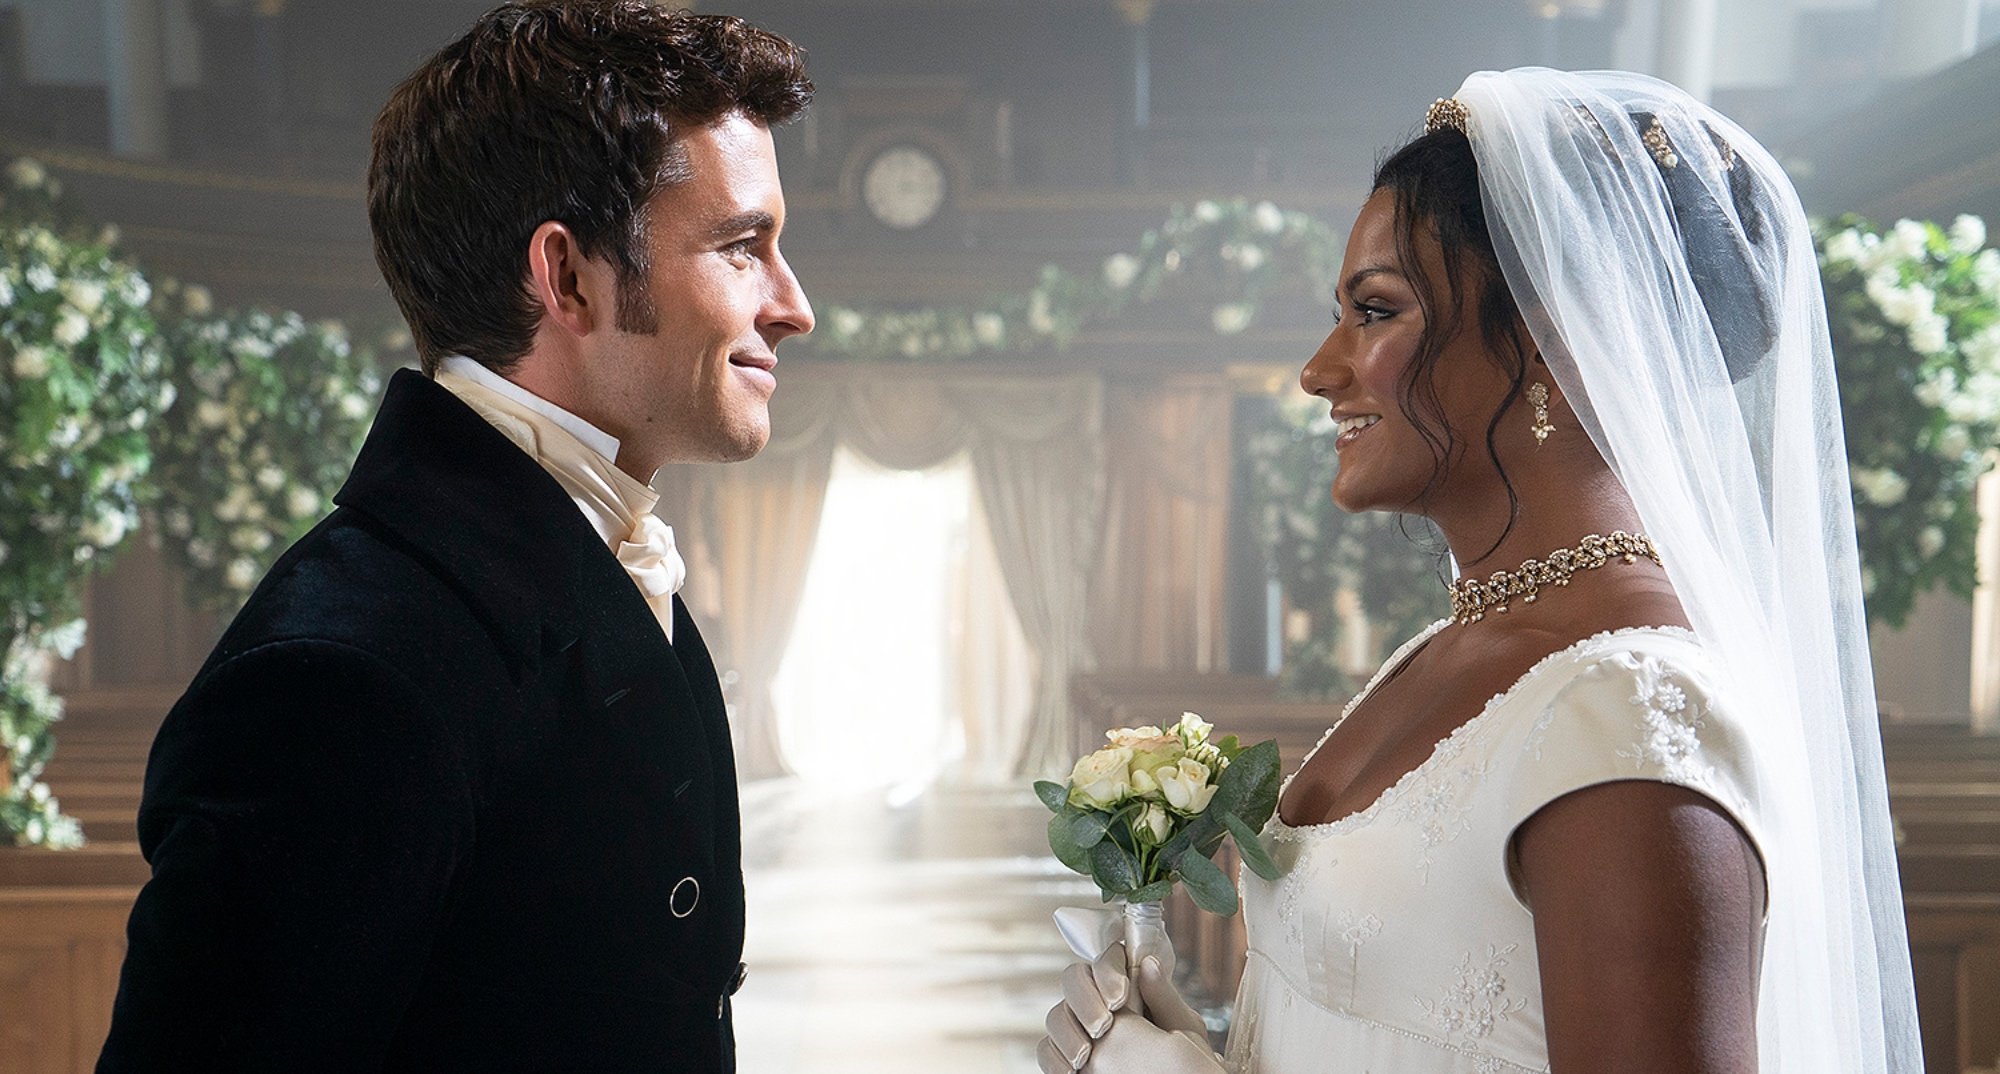 Kate and Anthony wedding scene in 'Bridgerton' Season 2 wearing dress and suit.